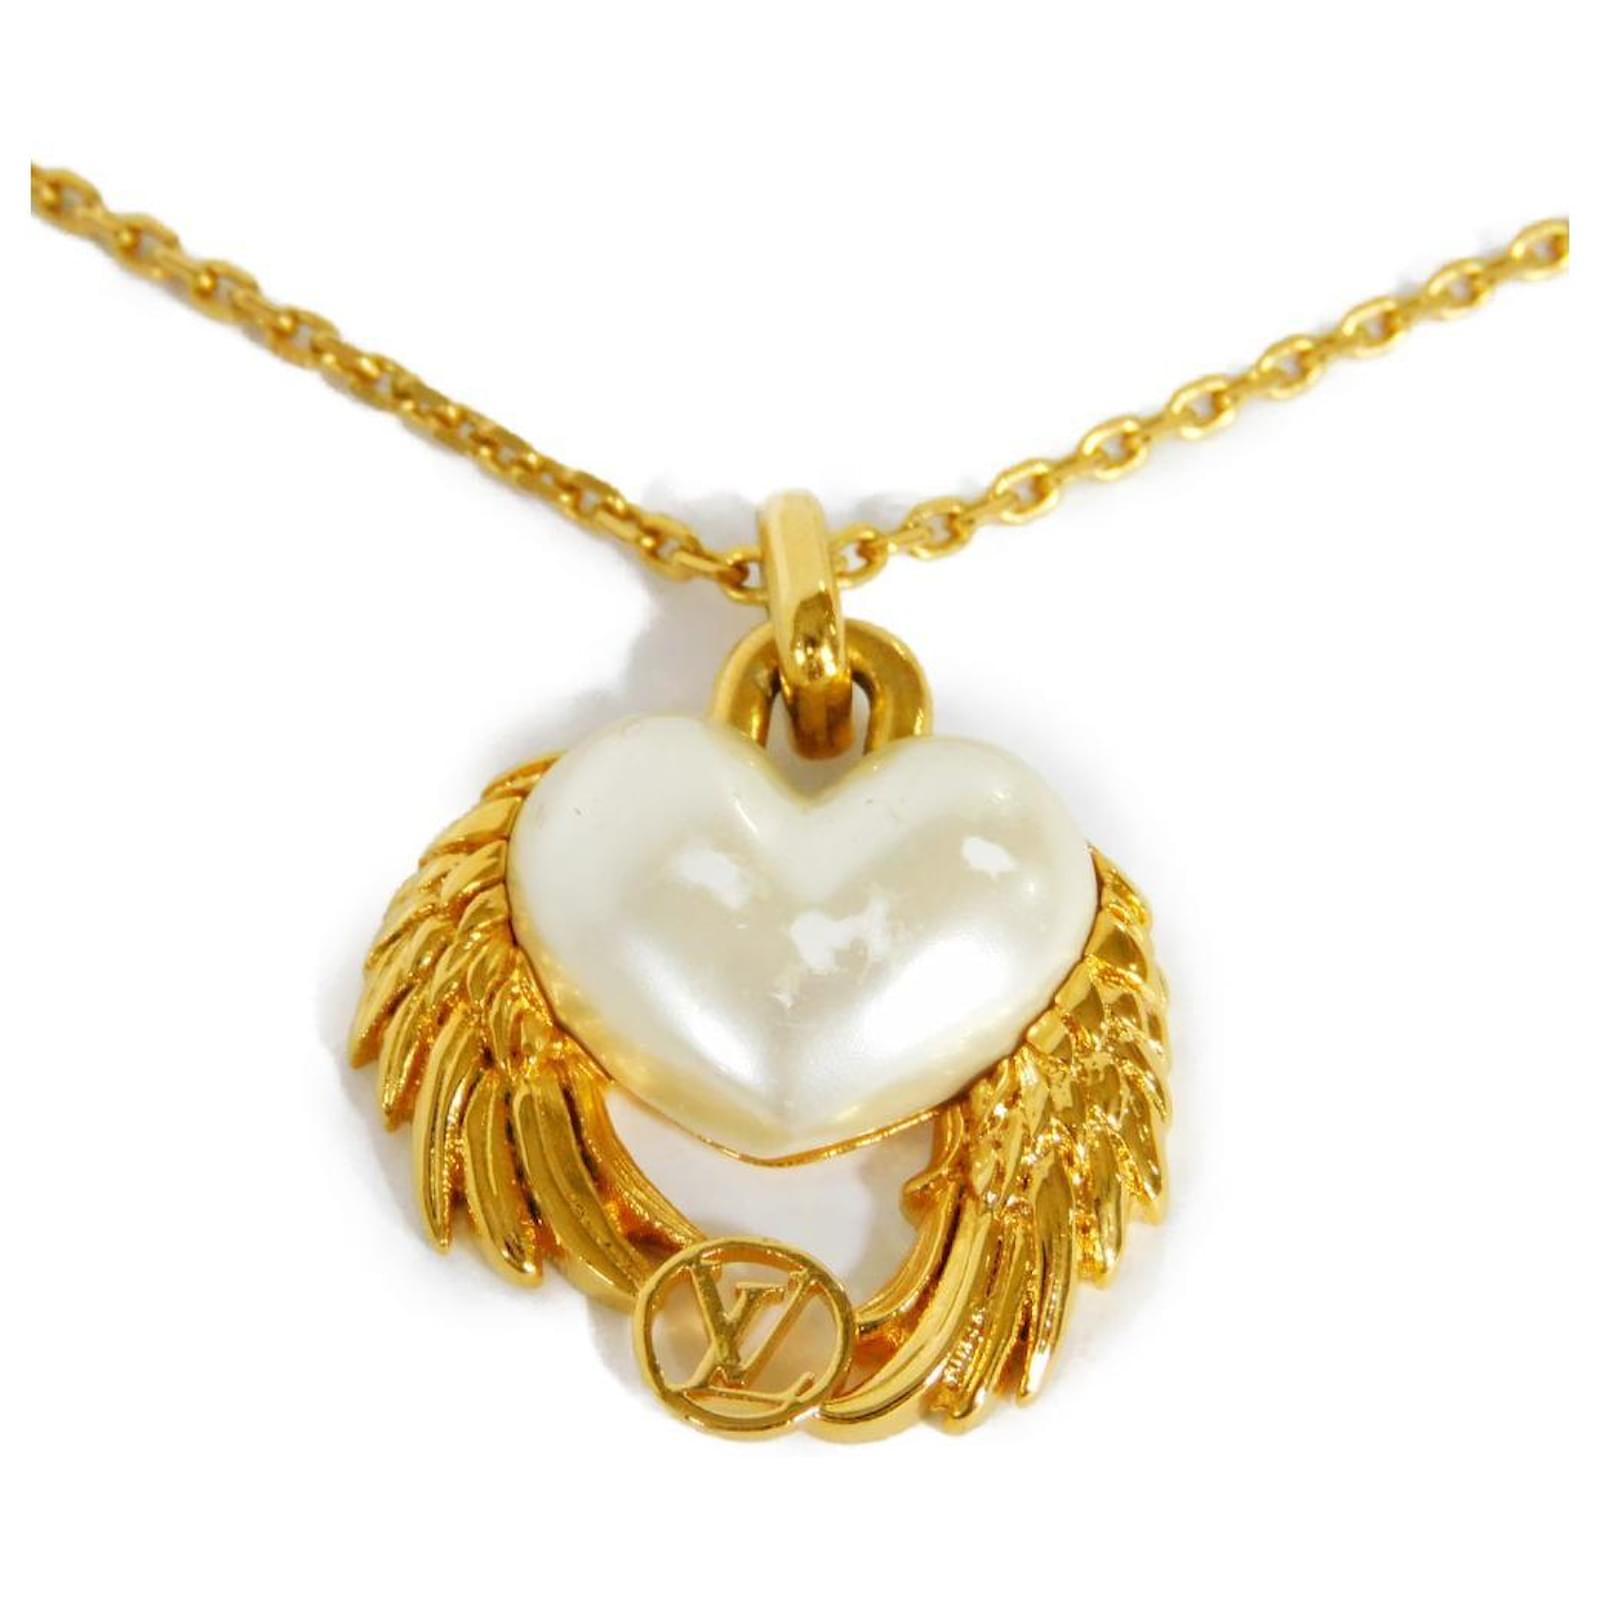 louis vuitton Louis Vuitton Collier Necklace in Gold, Metallic Gold. Size  all.